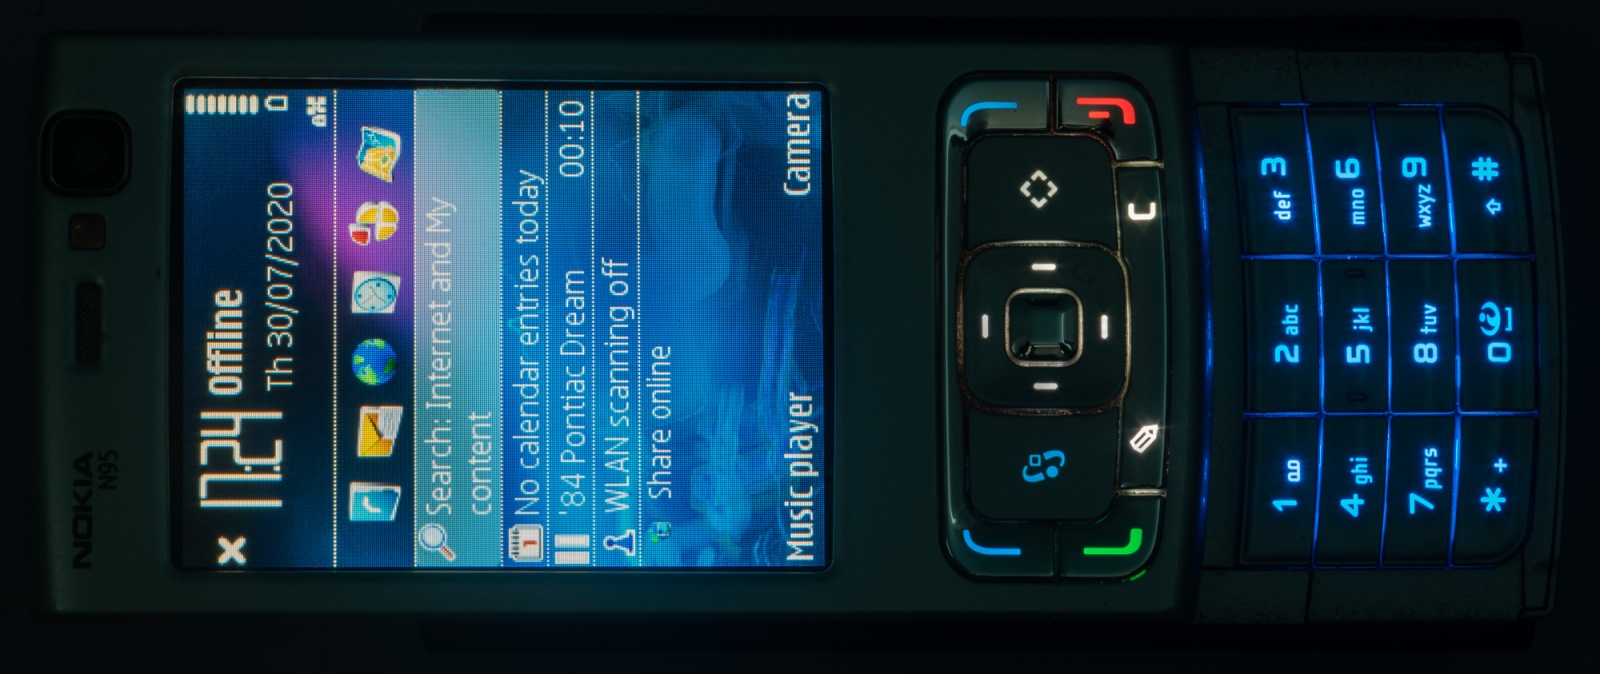 Nokia N95, лучший смартфон старой школы - 15